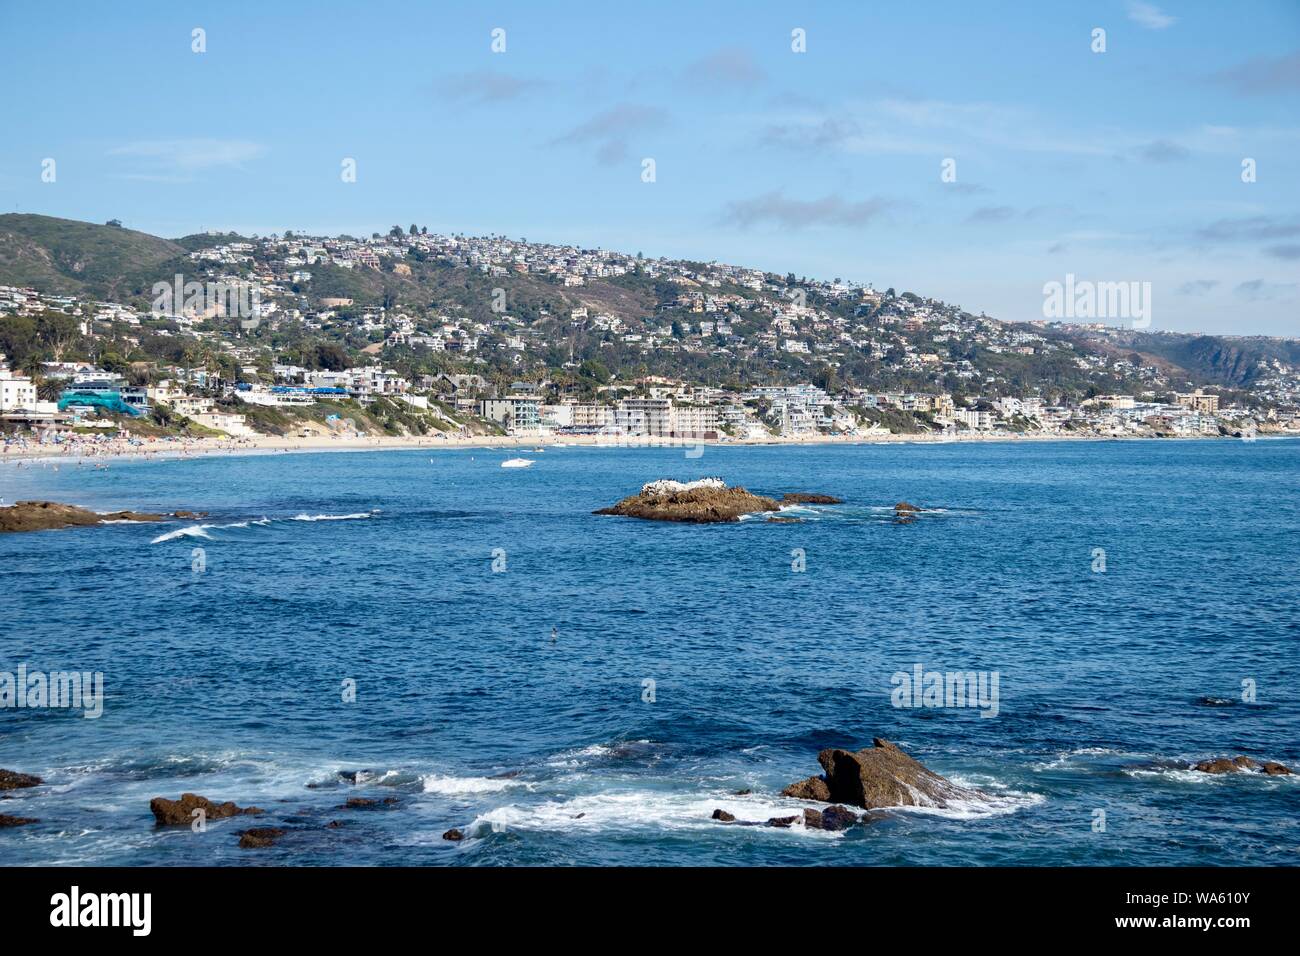 Laguna Beach Coastline in Orange County California Stock Photo